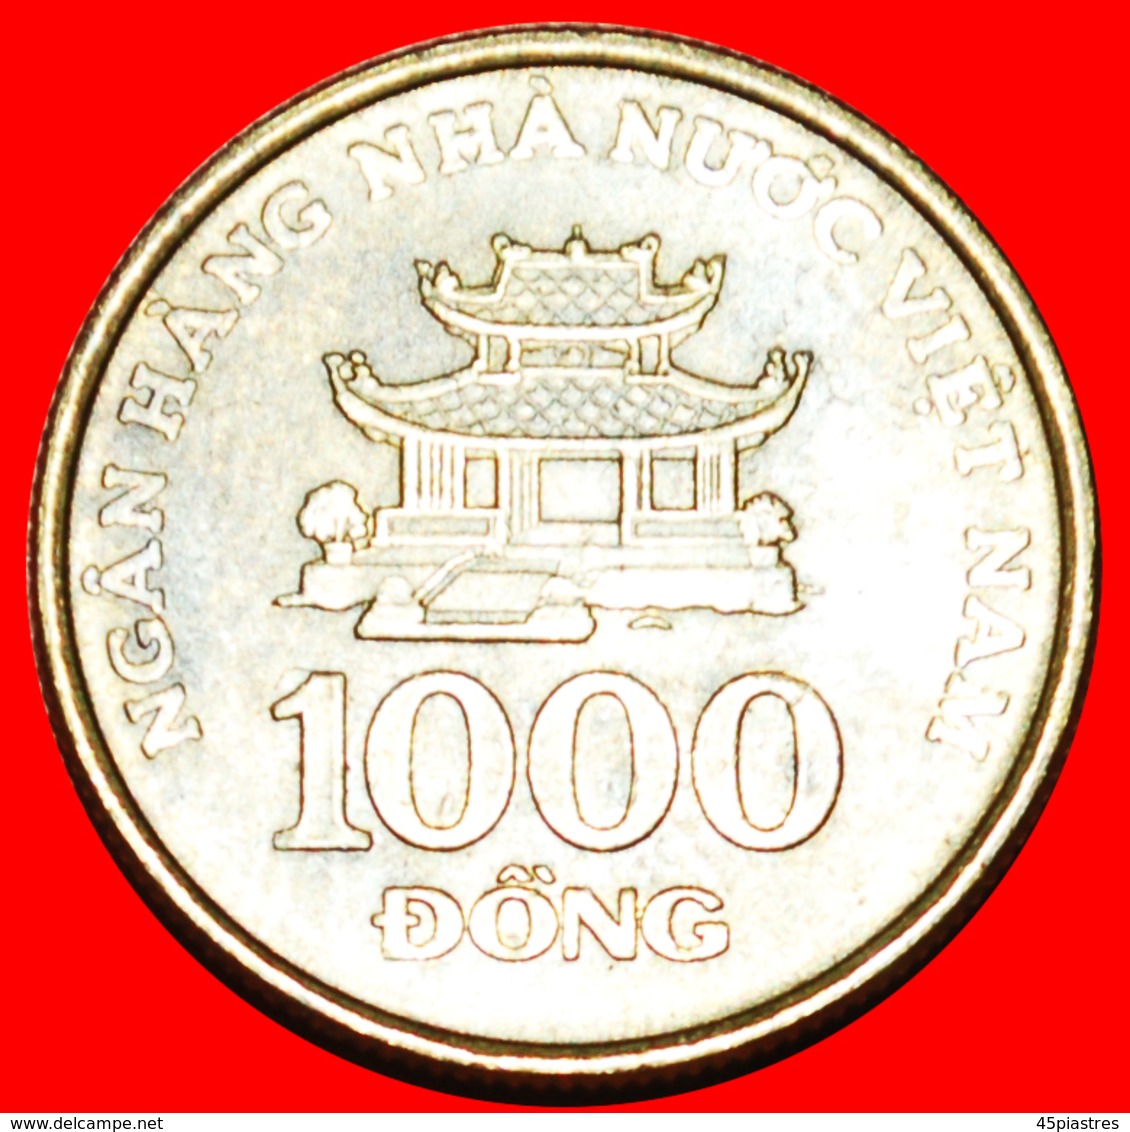 + FINLAND: VIETNAM ★ 1000 DONG 2003! LOW START ★ NO RESERVE! - Vietnam